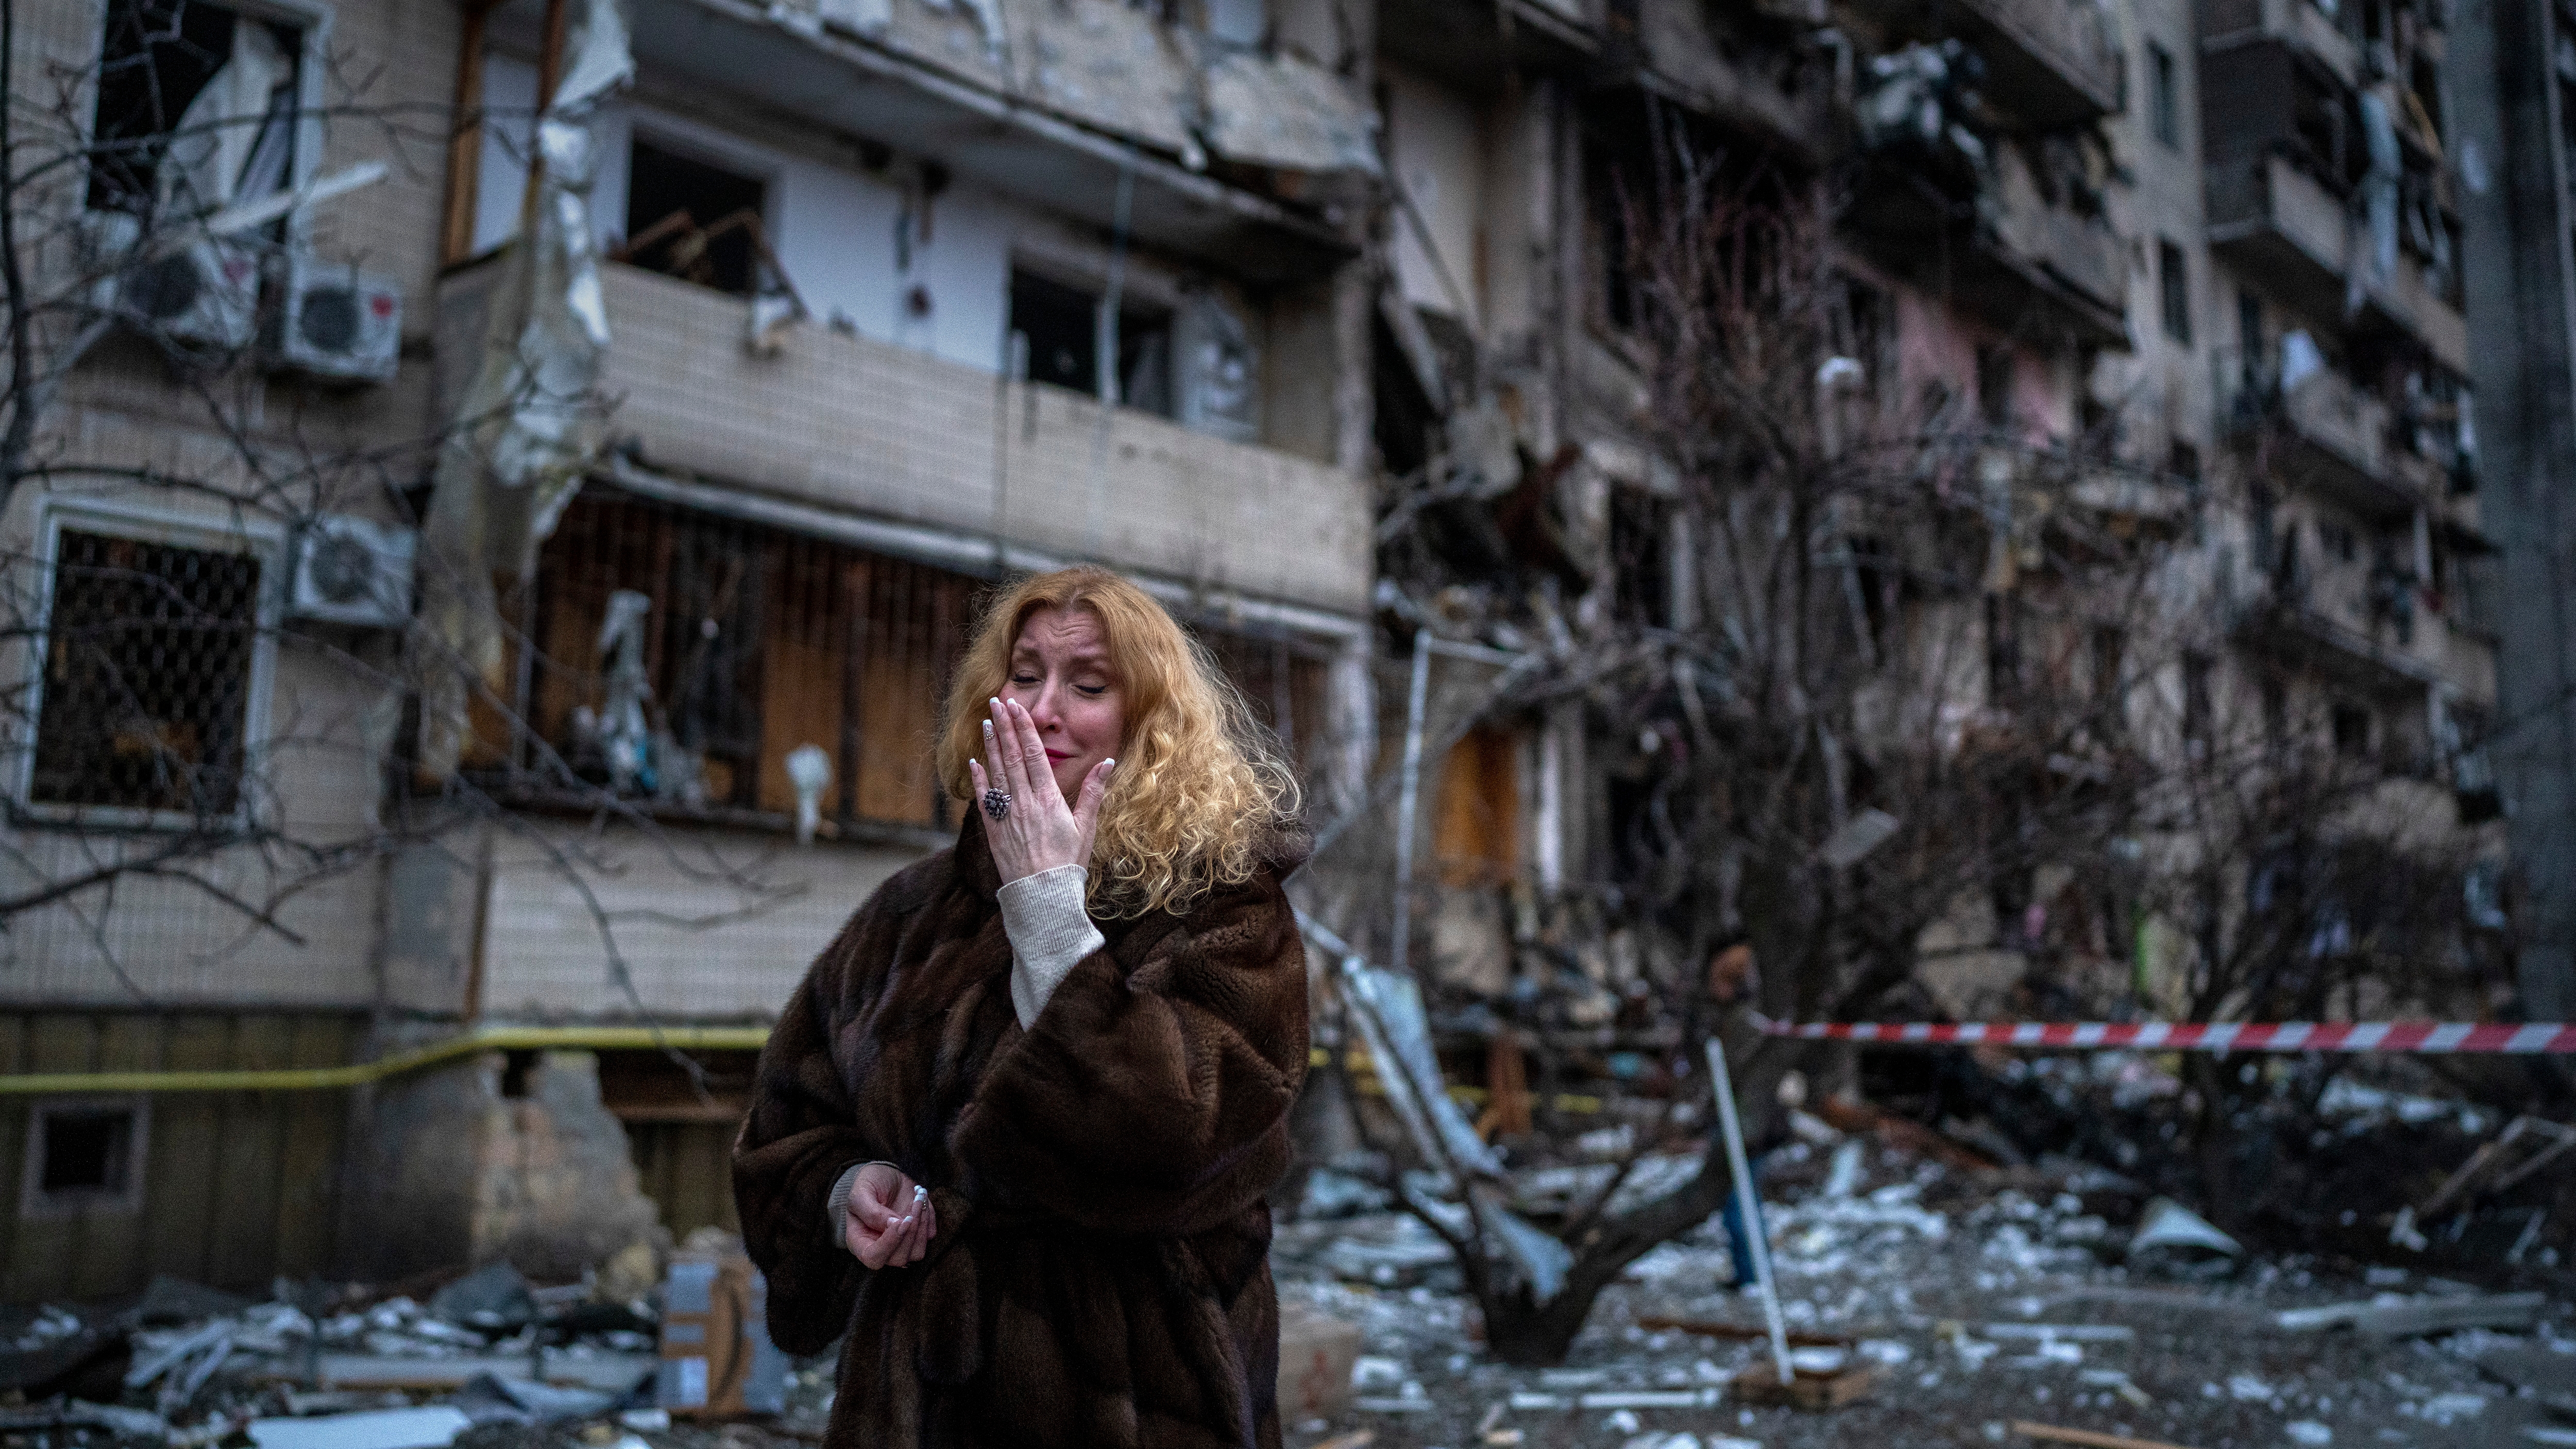 Natali Sevriukova reacts next to her house following a rocket attack the city of Kyiv, Ukraine, Friday, Feb. 25, 2022. (AP Photo/Emilio Morenatti)